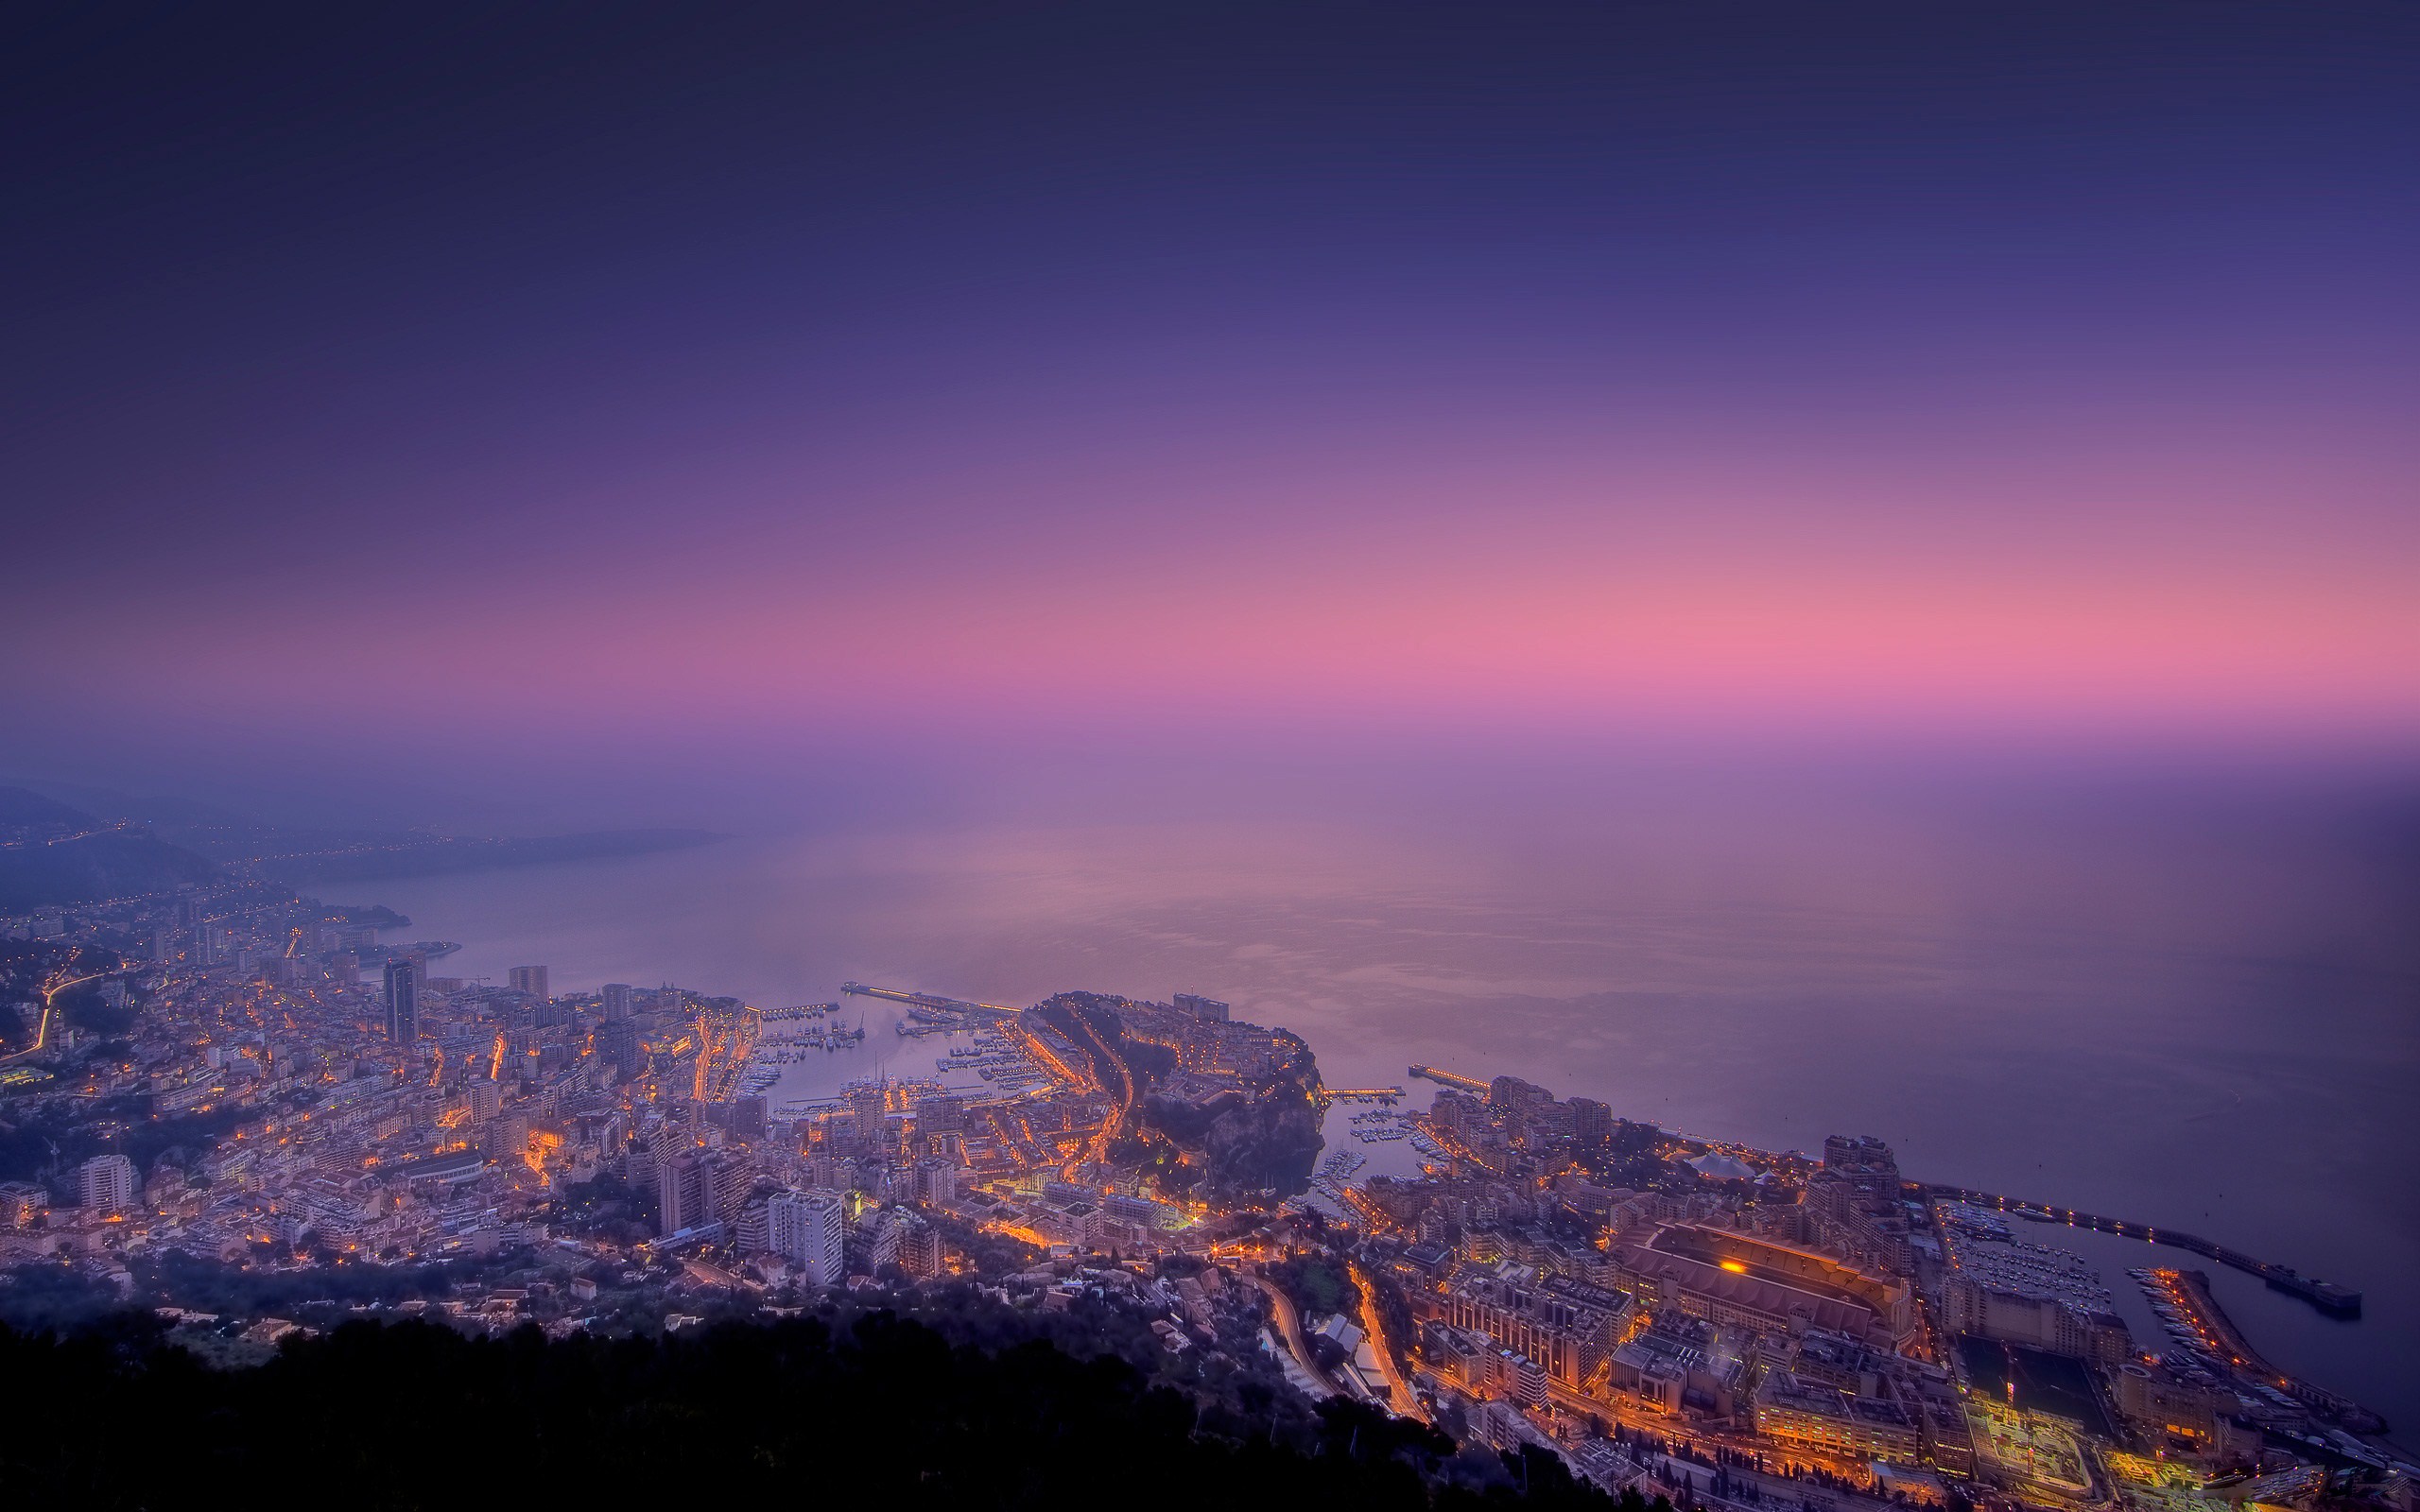 Man Made Monaco HD Wallpaper | Background Image